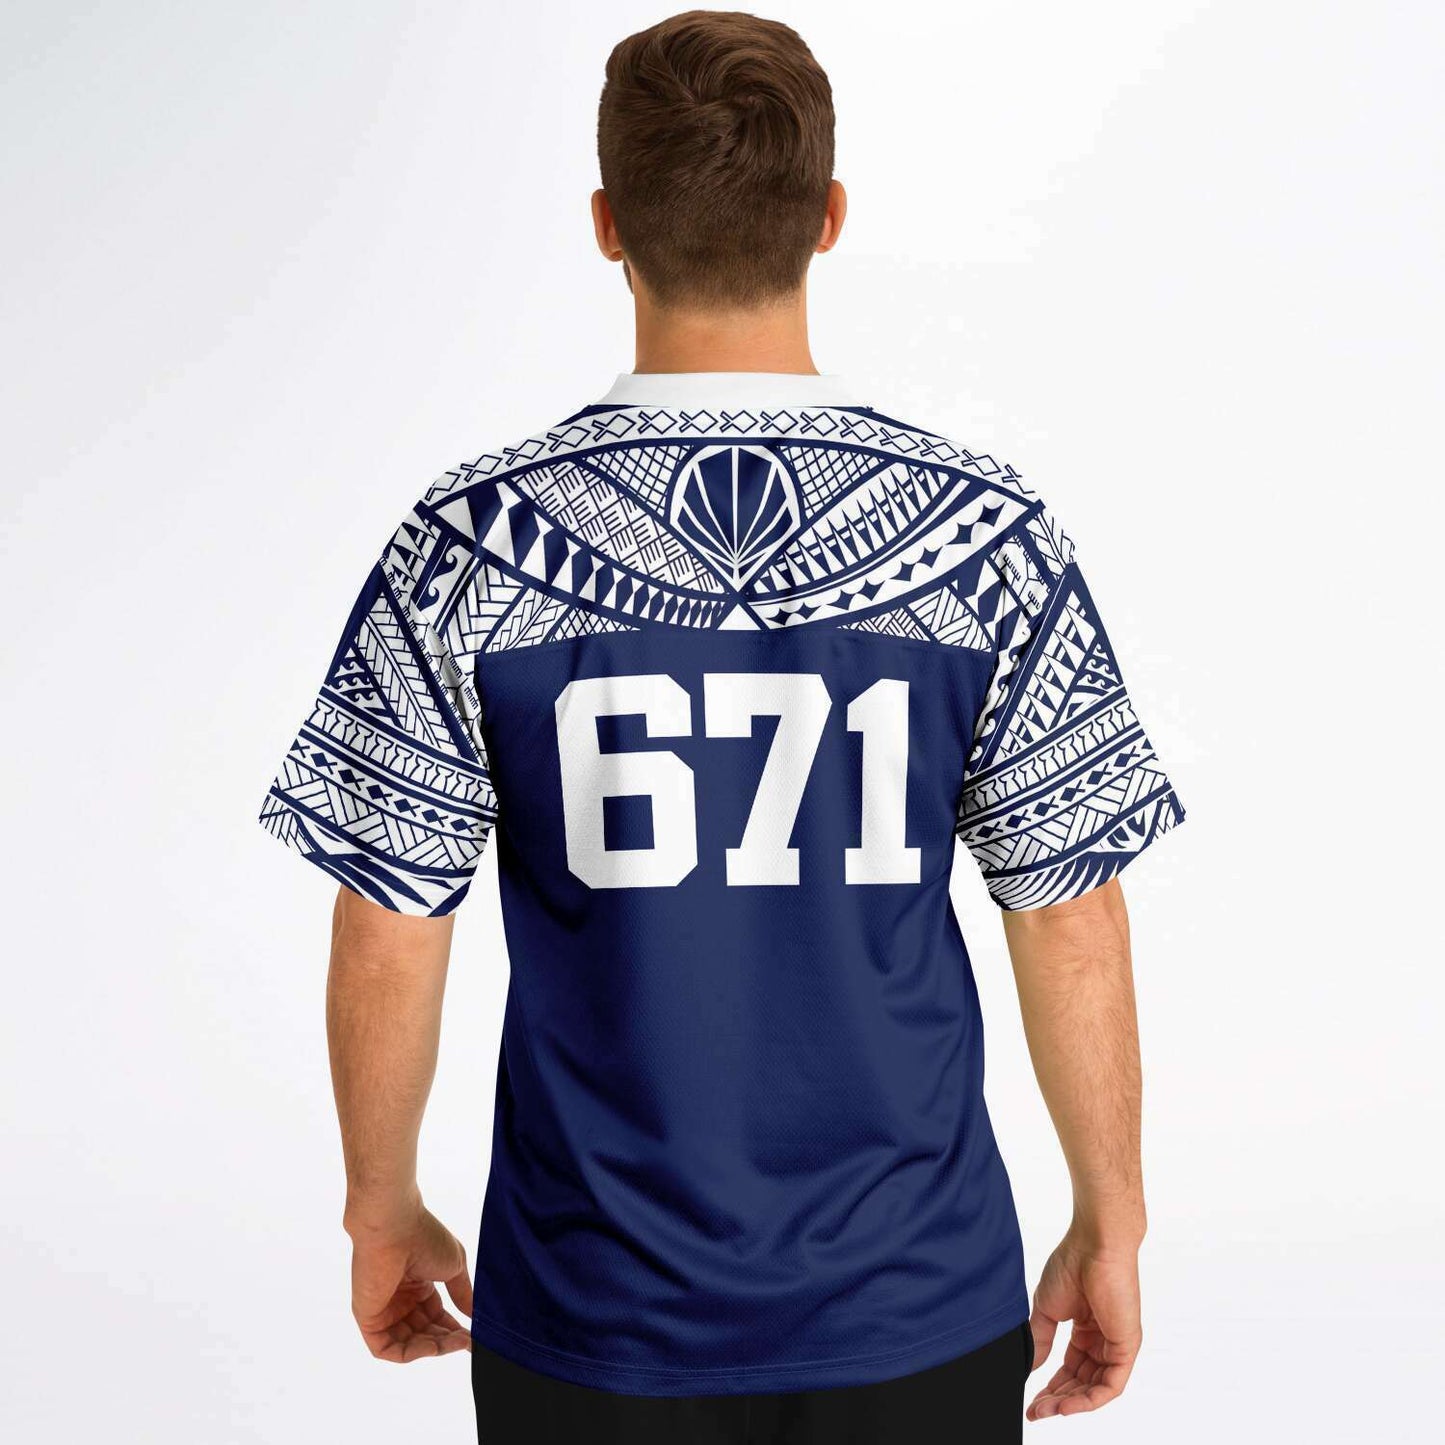 Guam 671 Tribal Blue Football Jersey